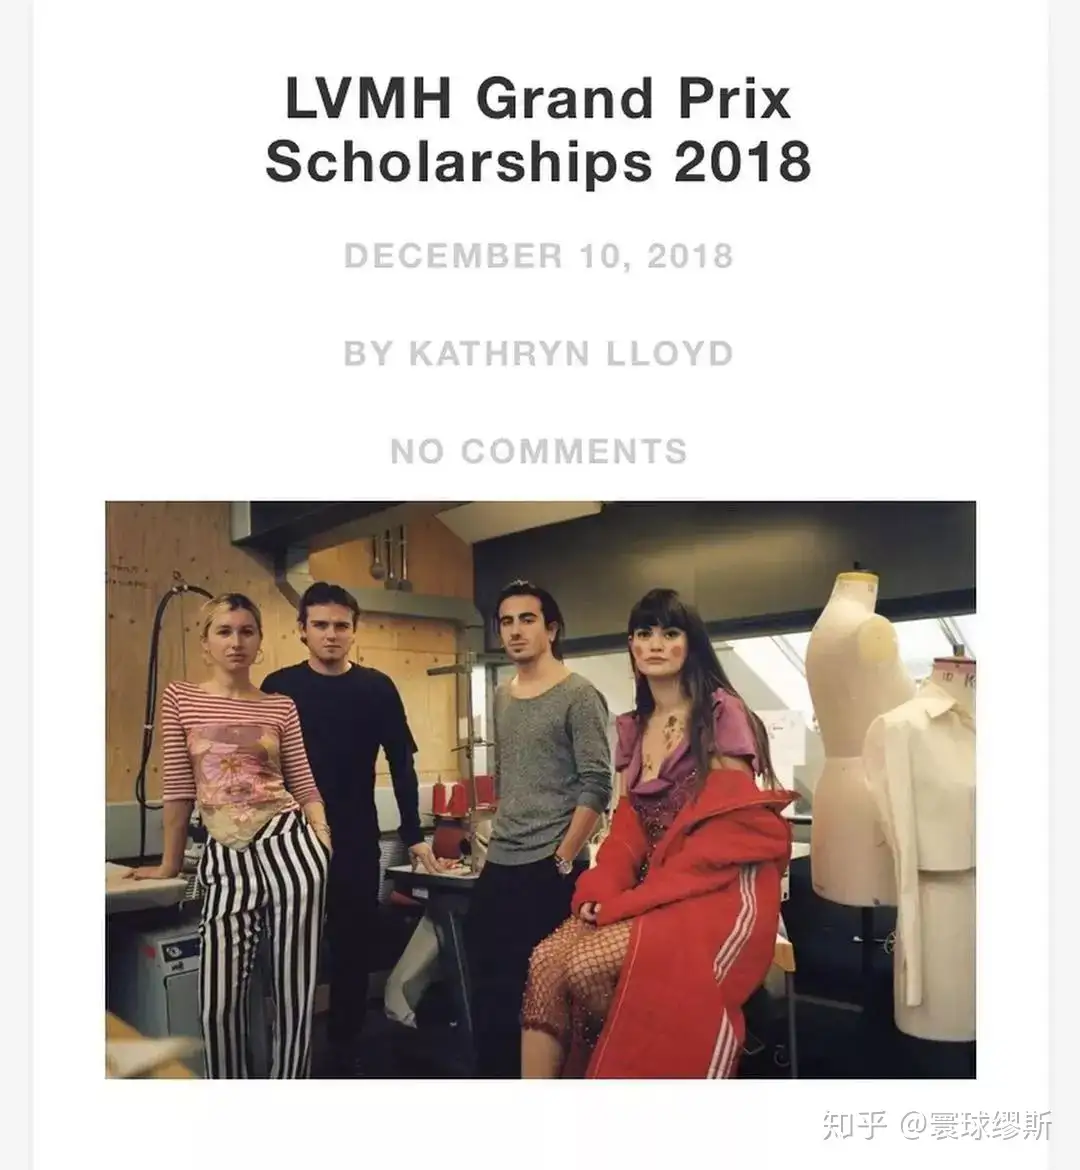 LVMH Grand Prix Scholarships 2018